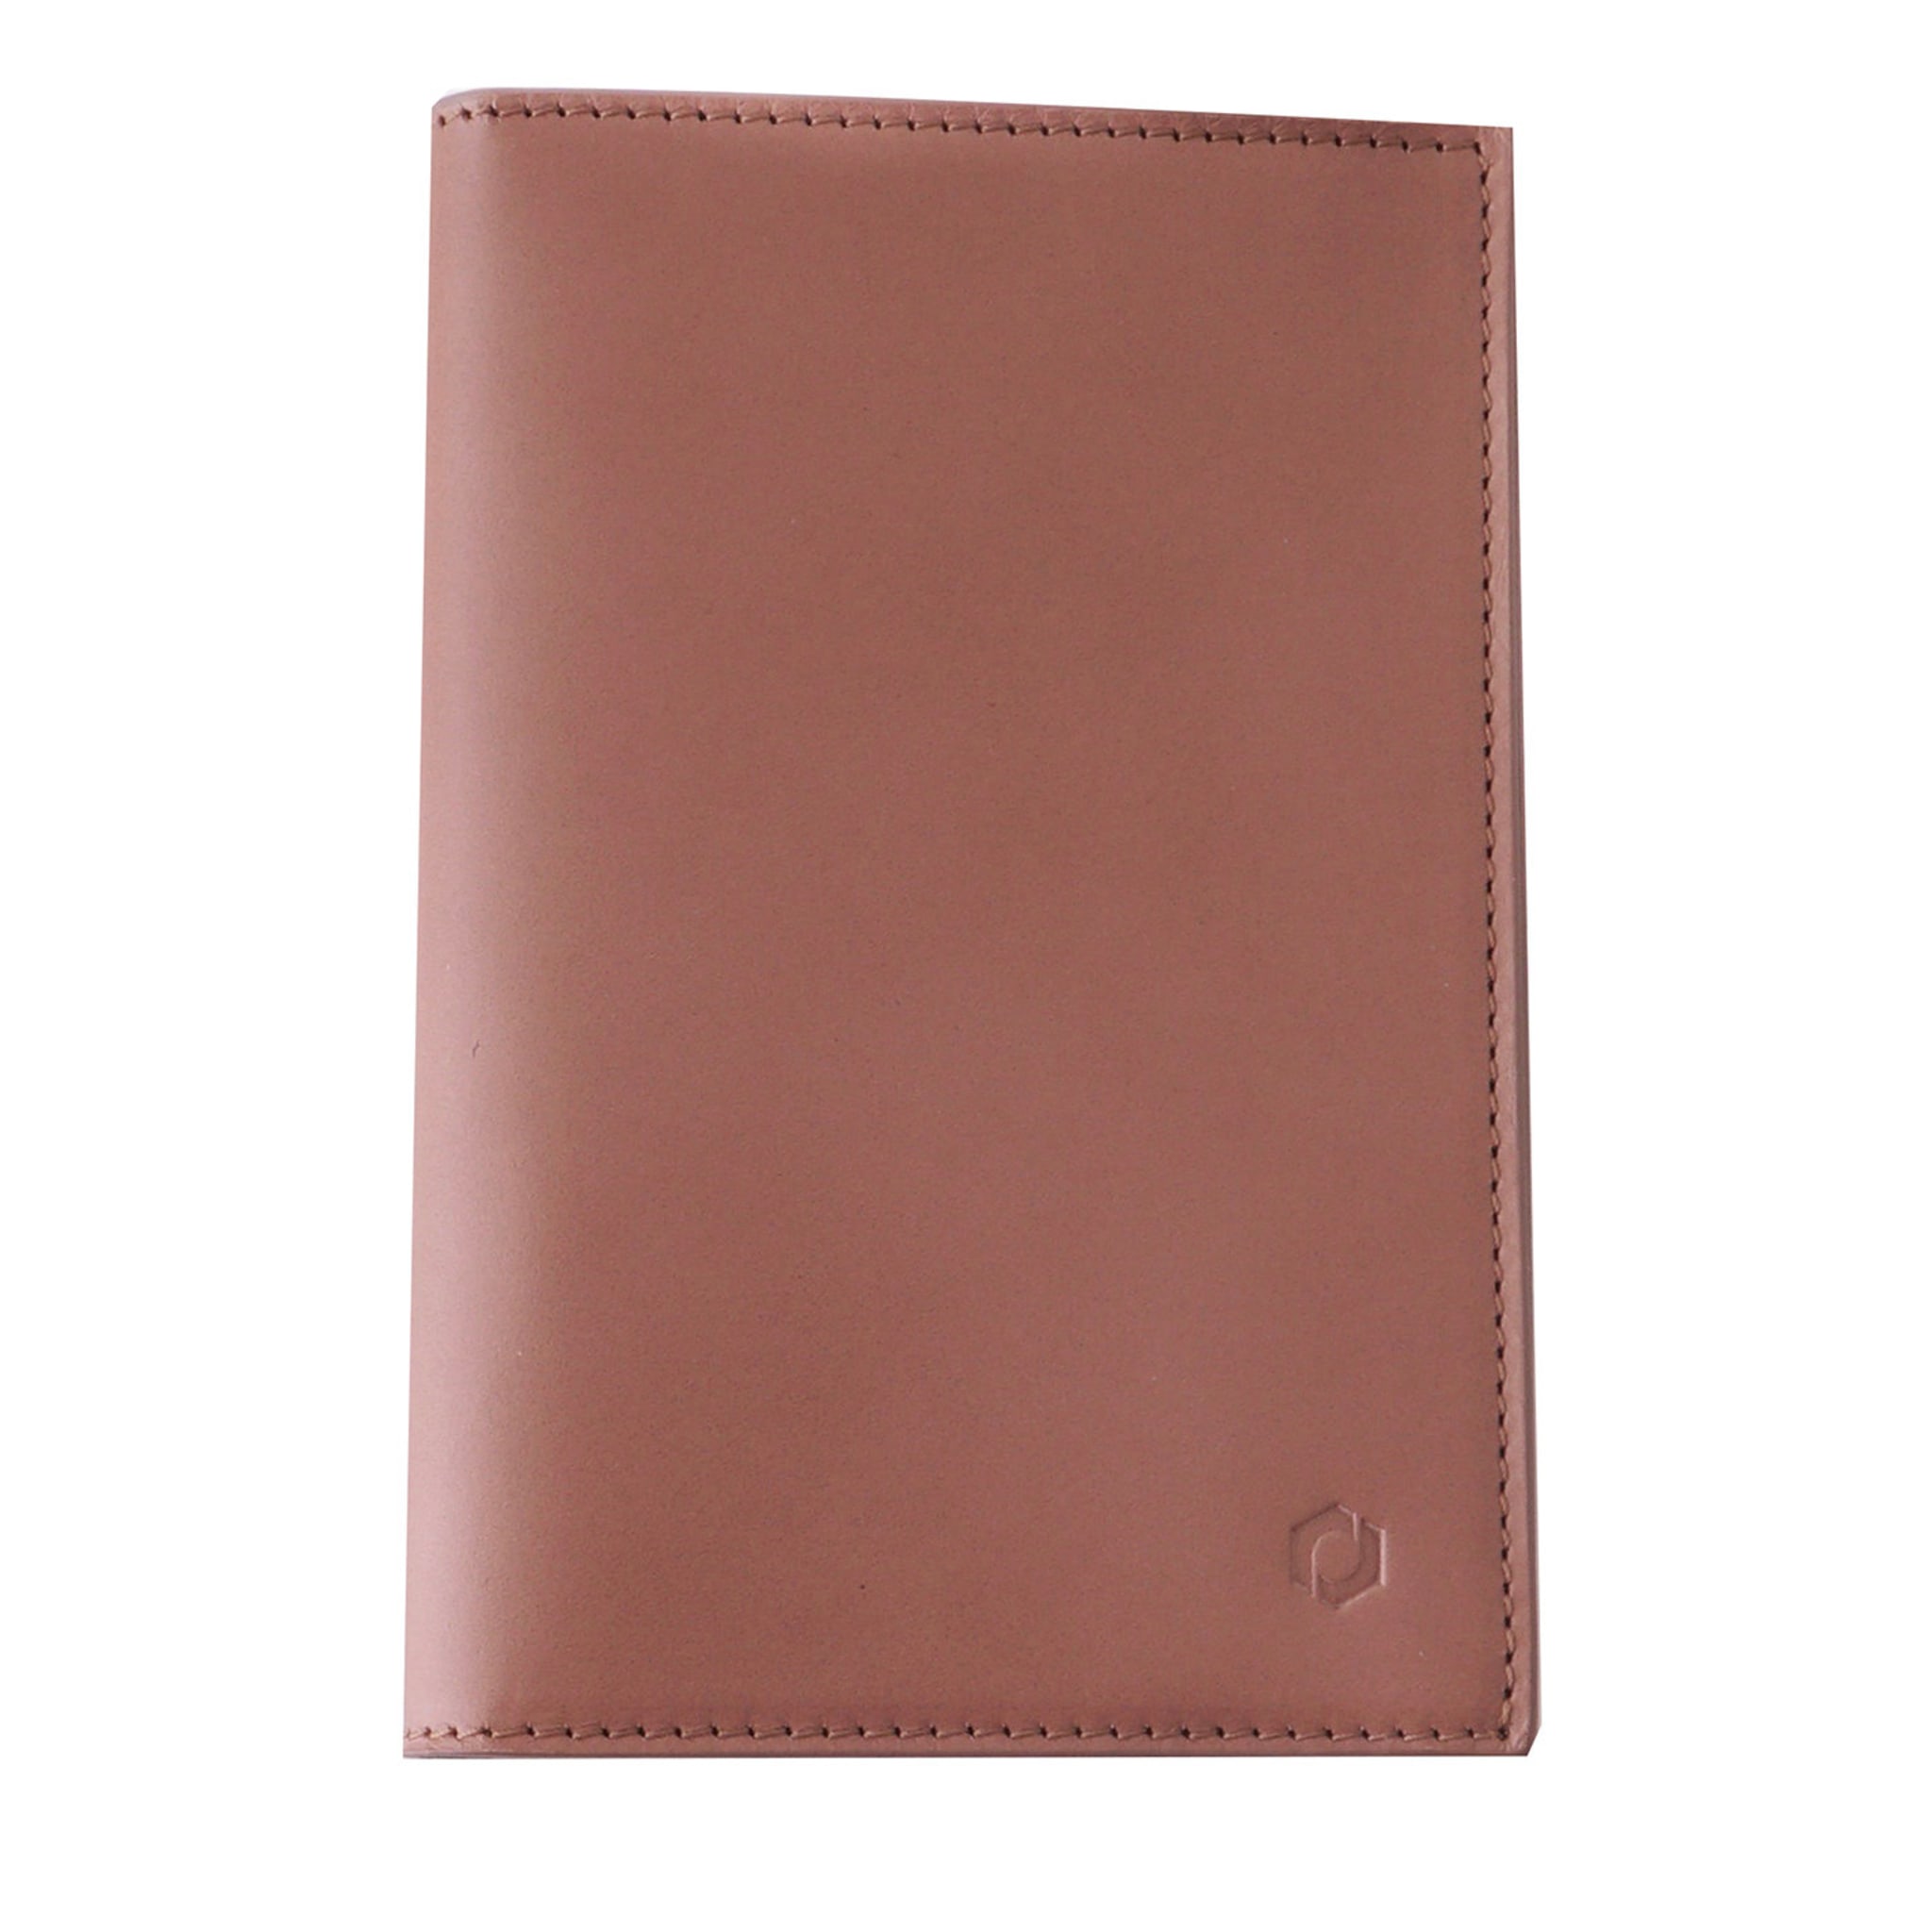 Light Brown Leather Passport Holder - Main view